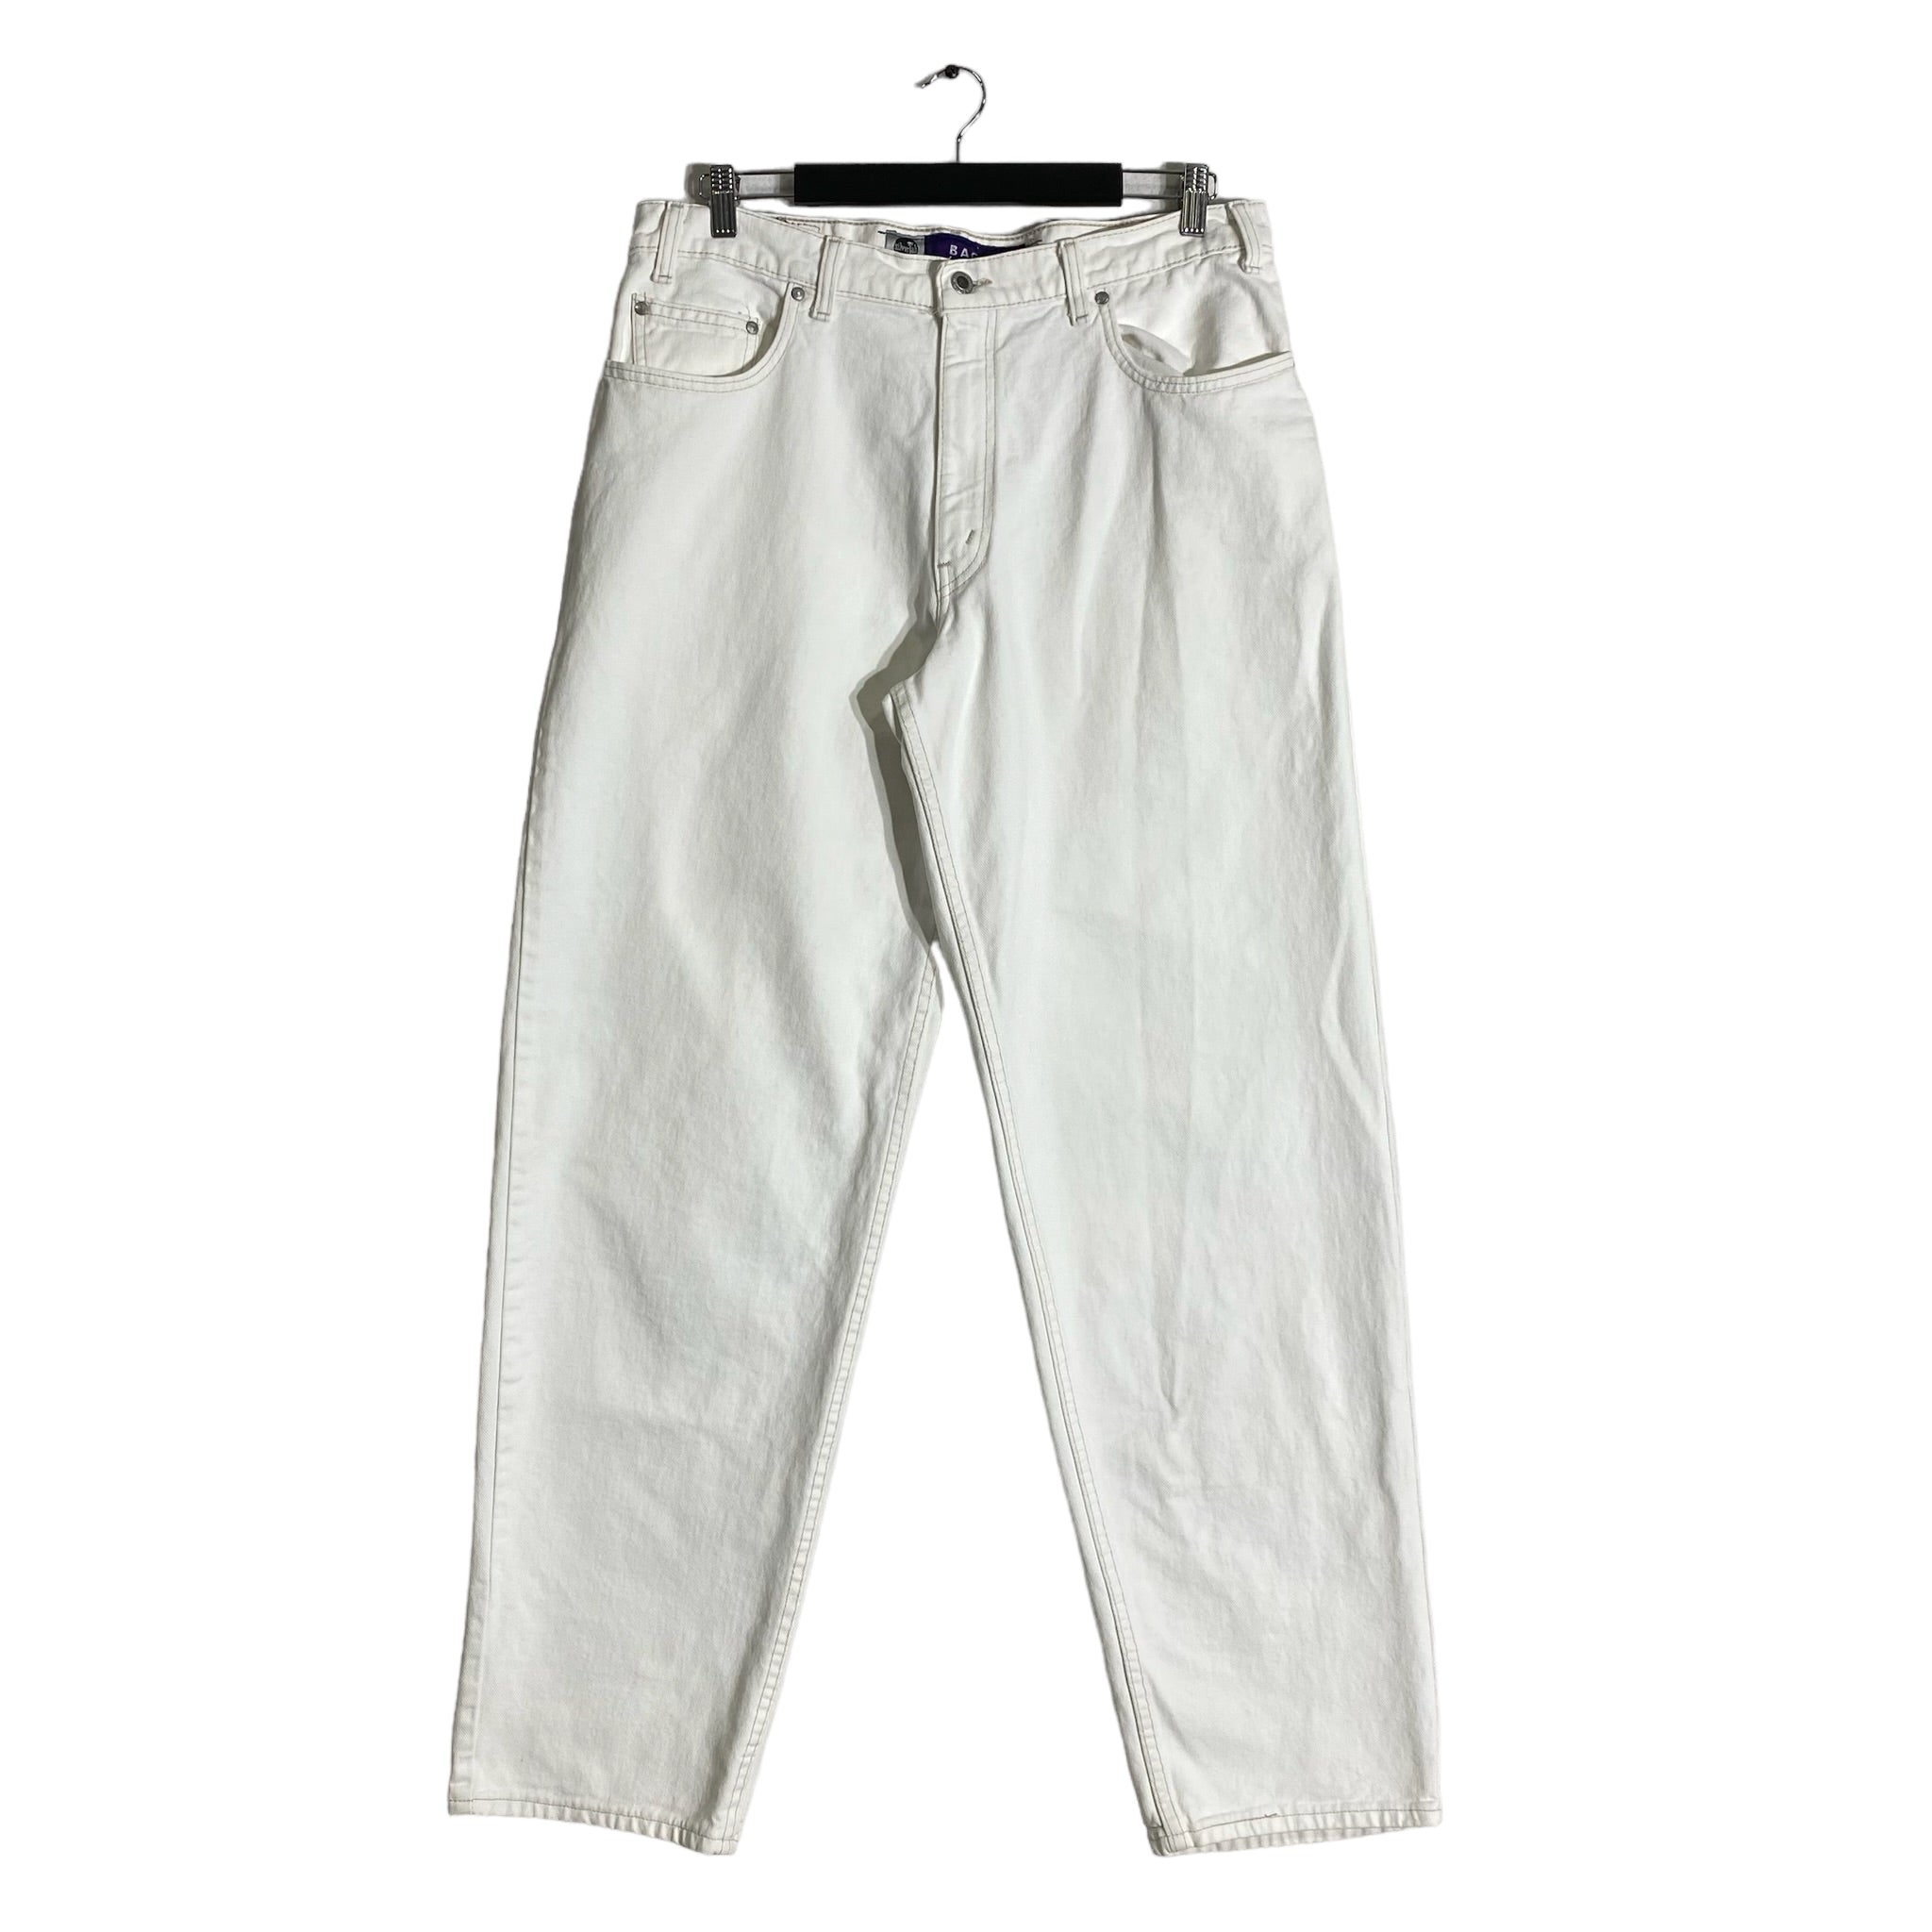 Vintage Levi's Silver Tab Denim Jeans 90s